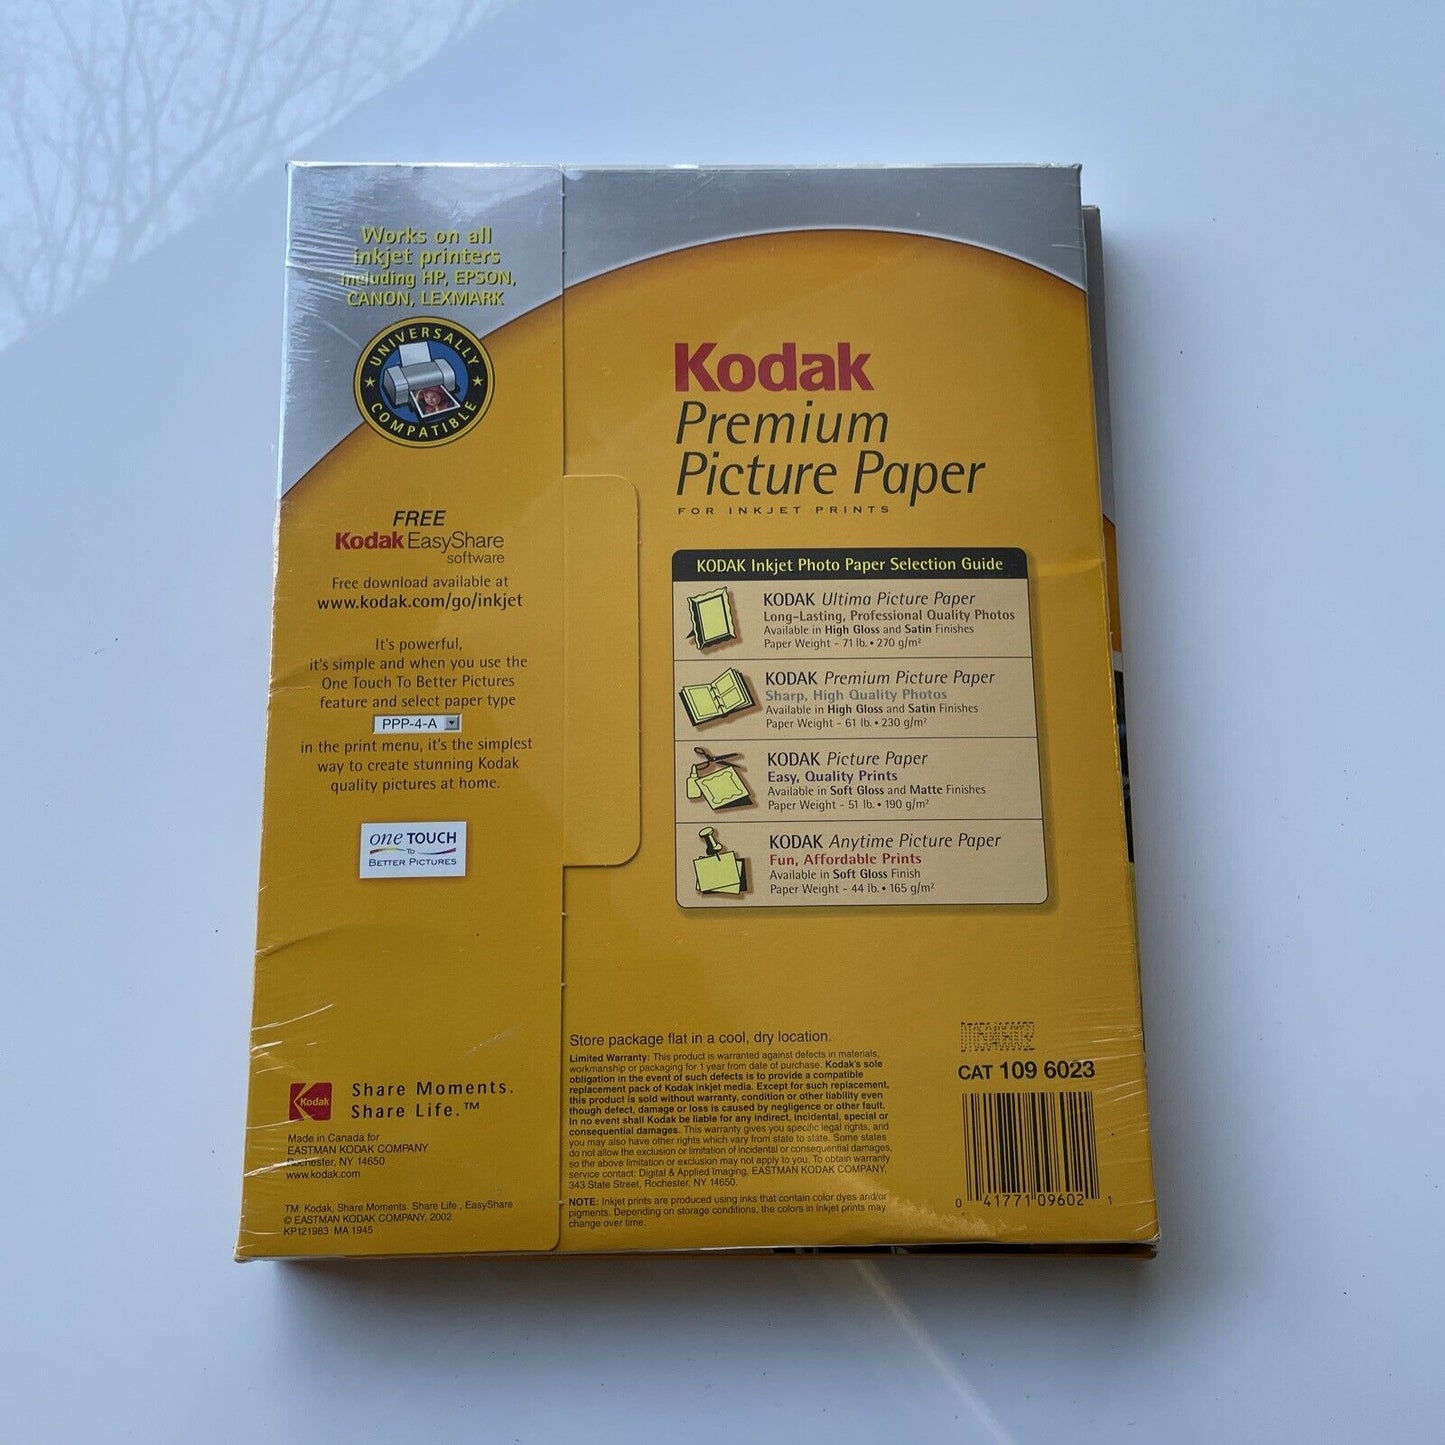 Lot Of 2 Kodak Premium Picture Paper for Inkjet 8 1/2 X 11 High Gloss 50pc Pack